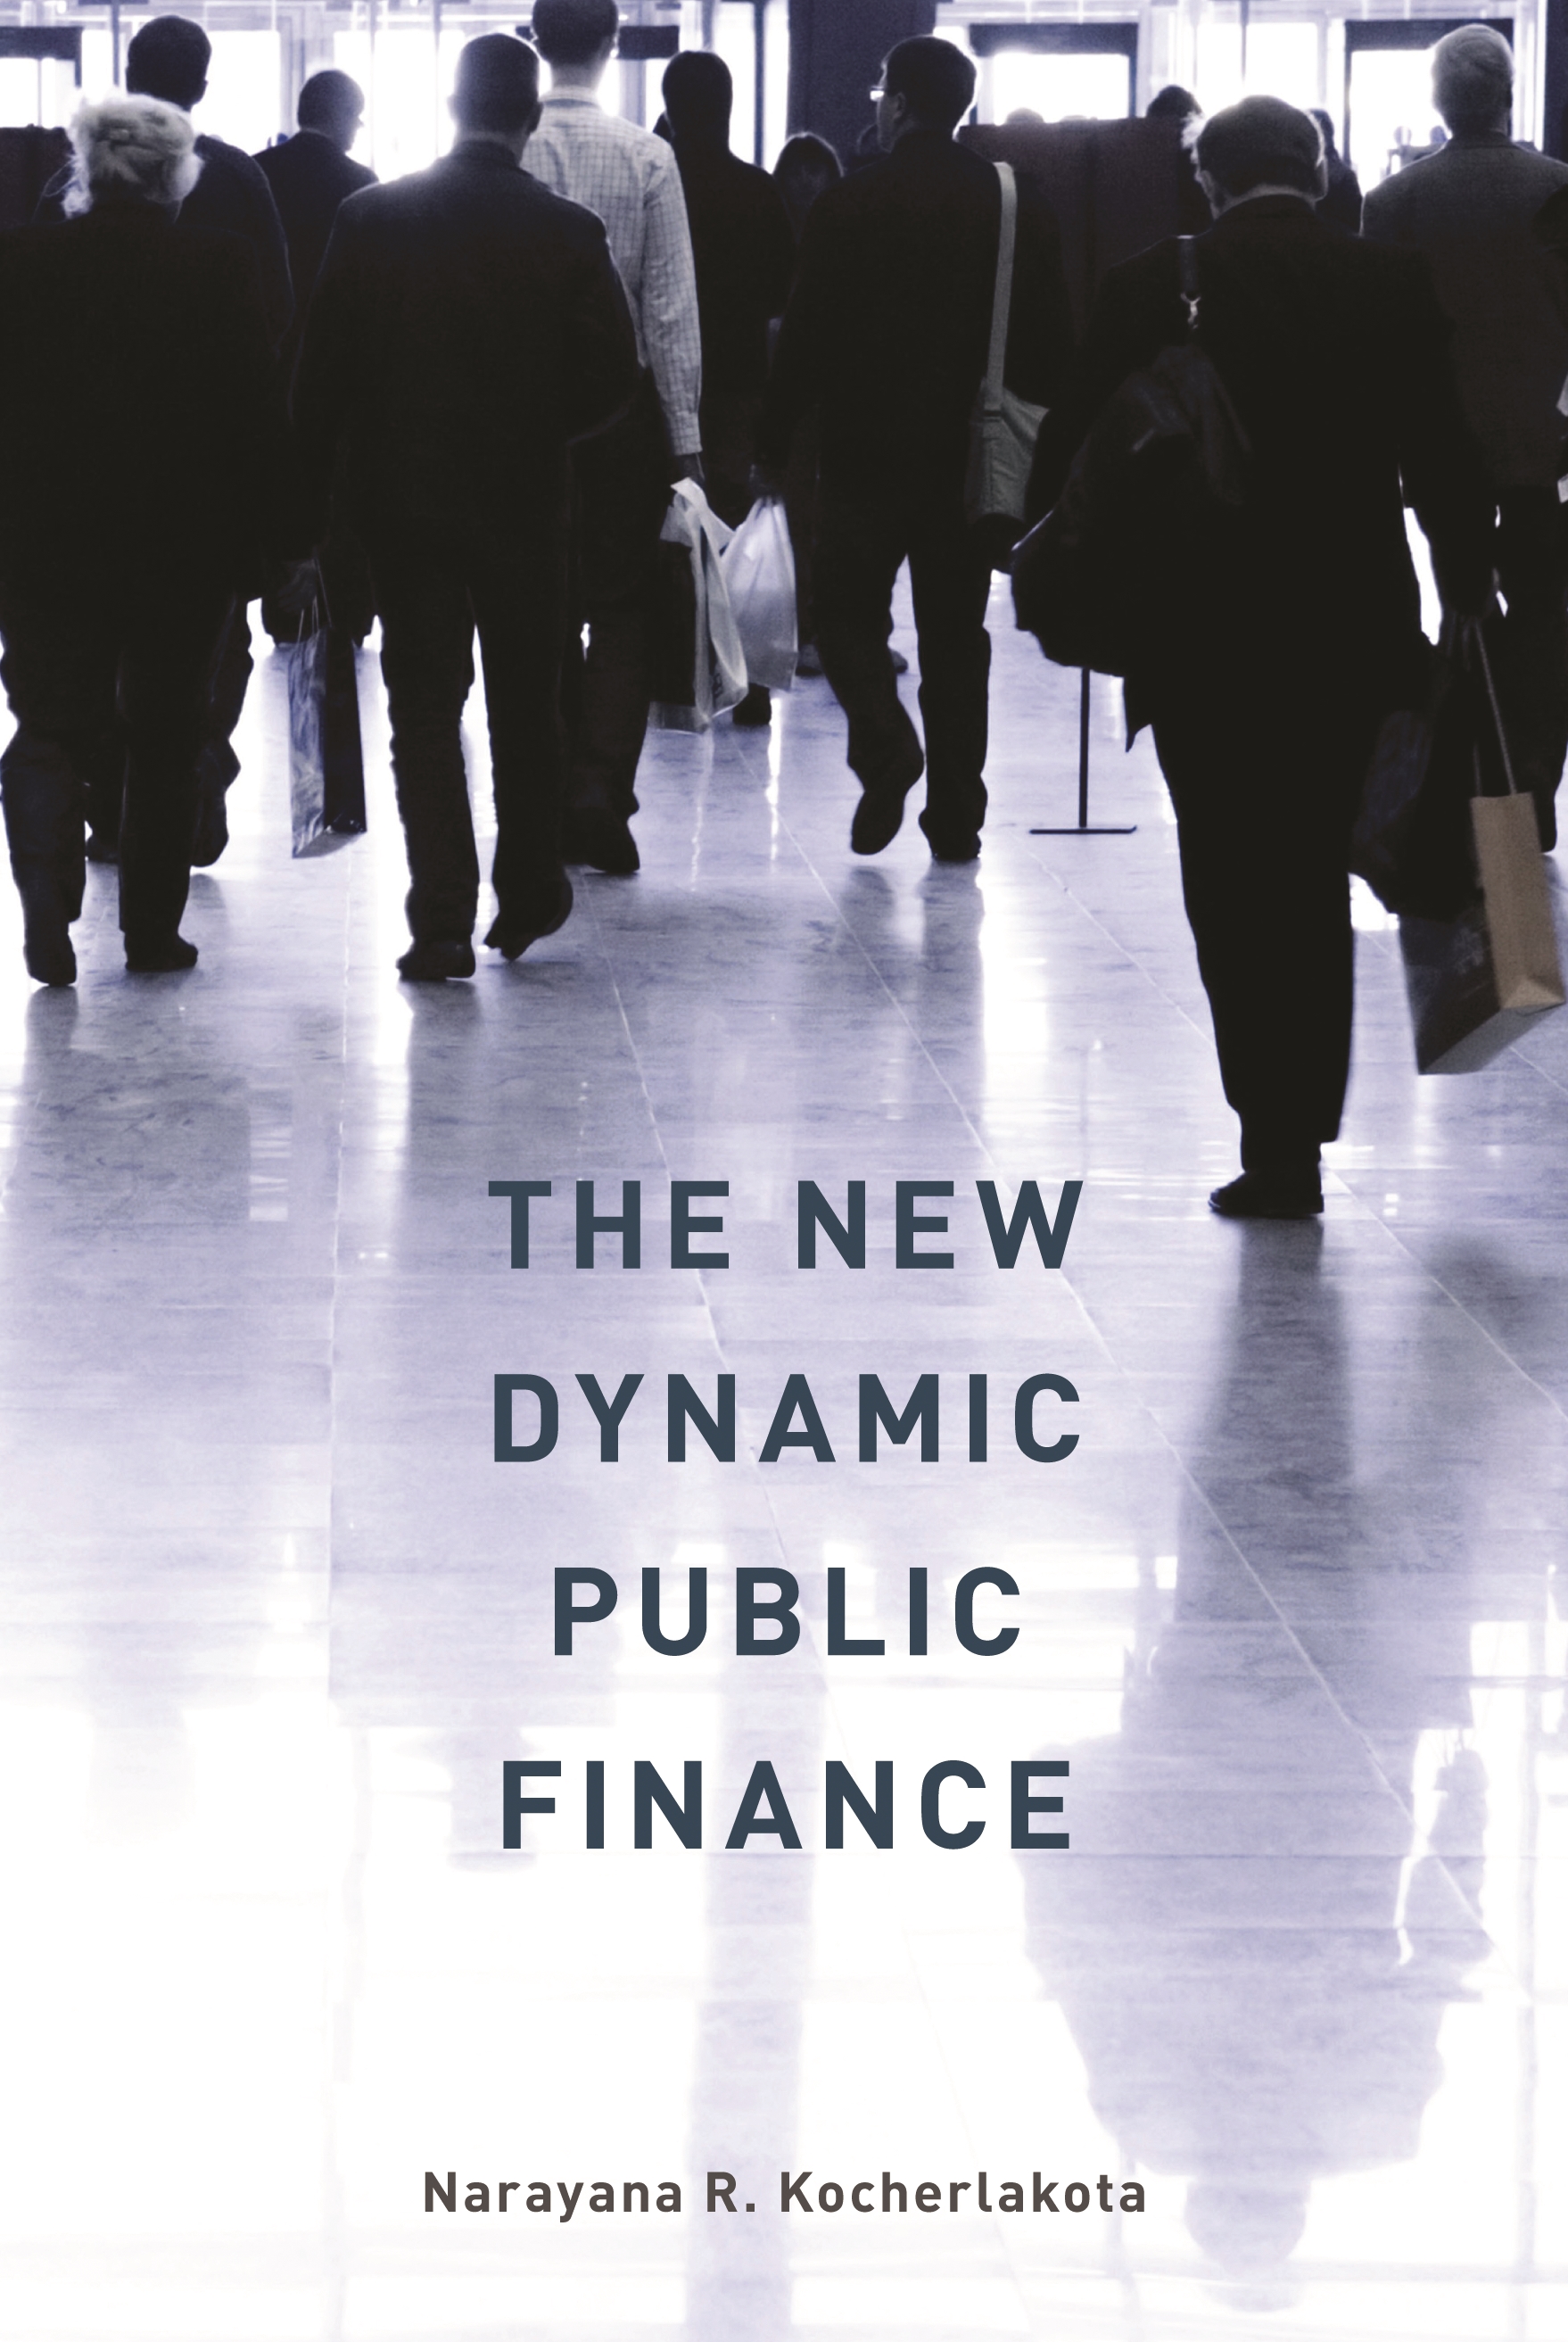 New dynamic. The New public Finance.